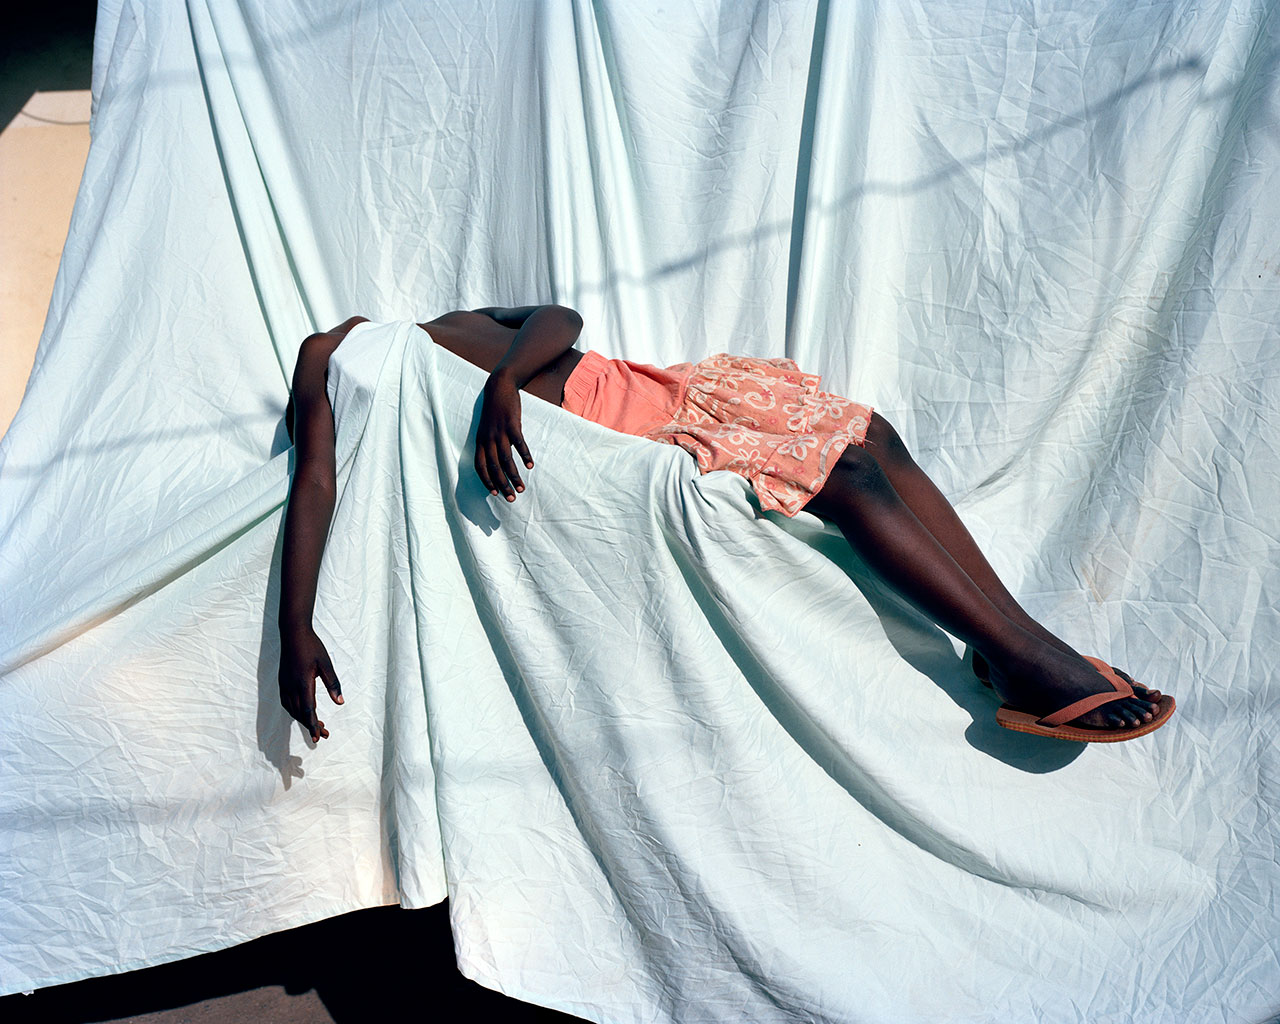 Photographer Viviane Sassen on art, fashion and intuition